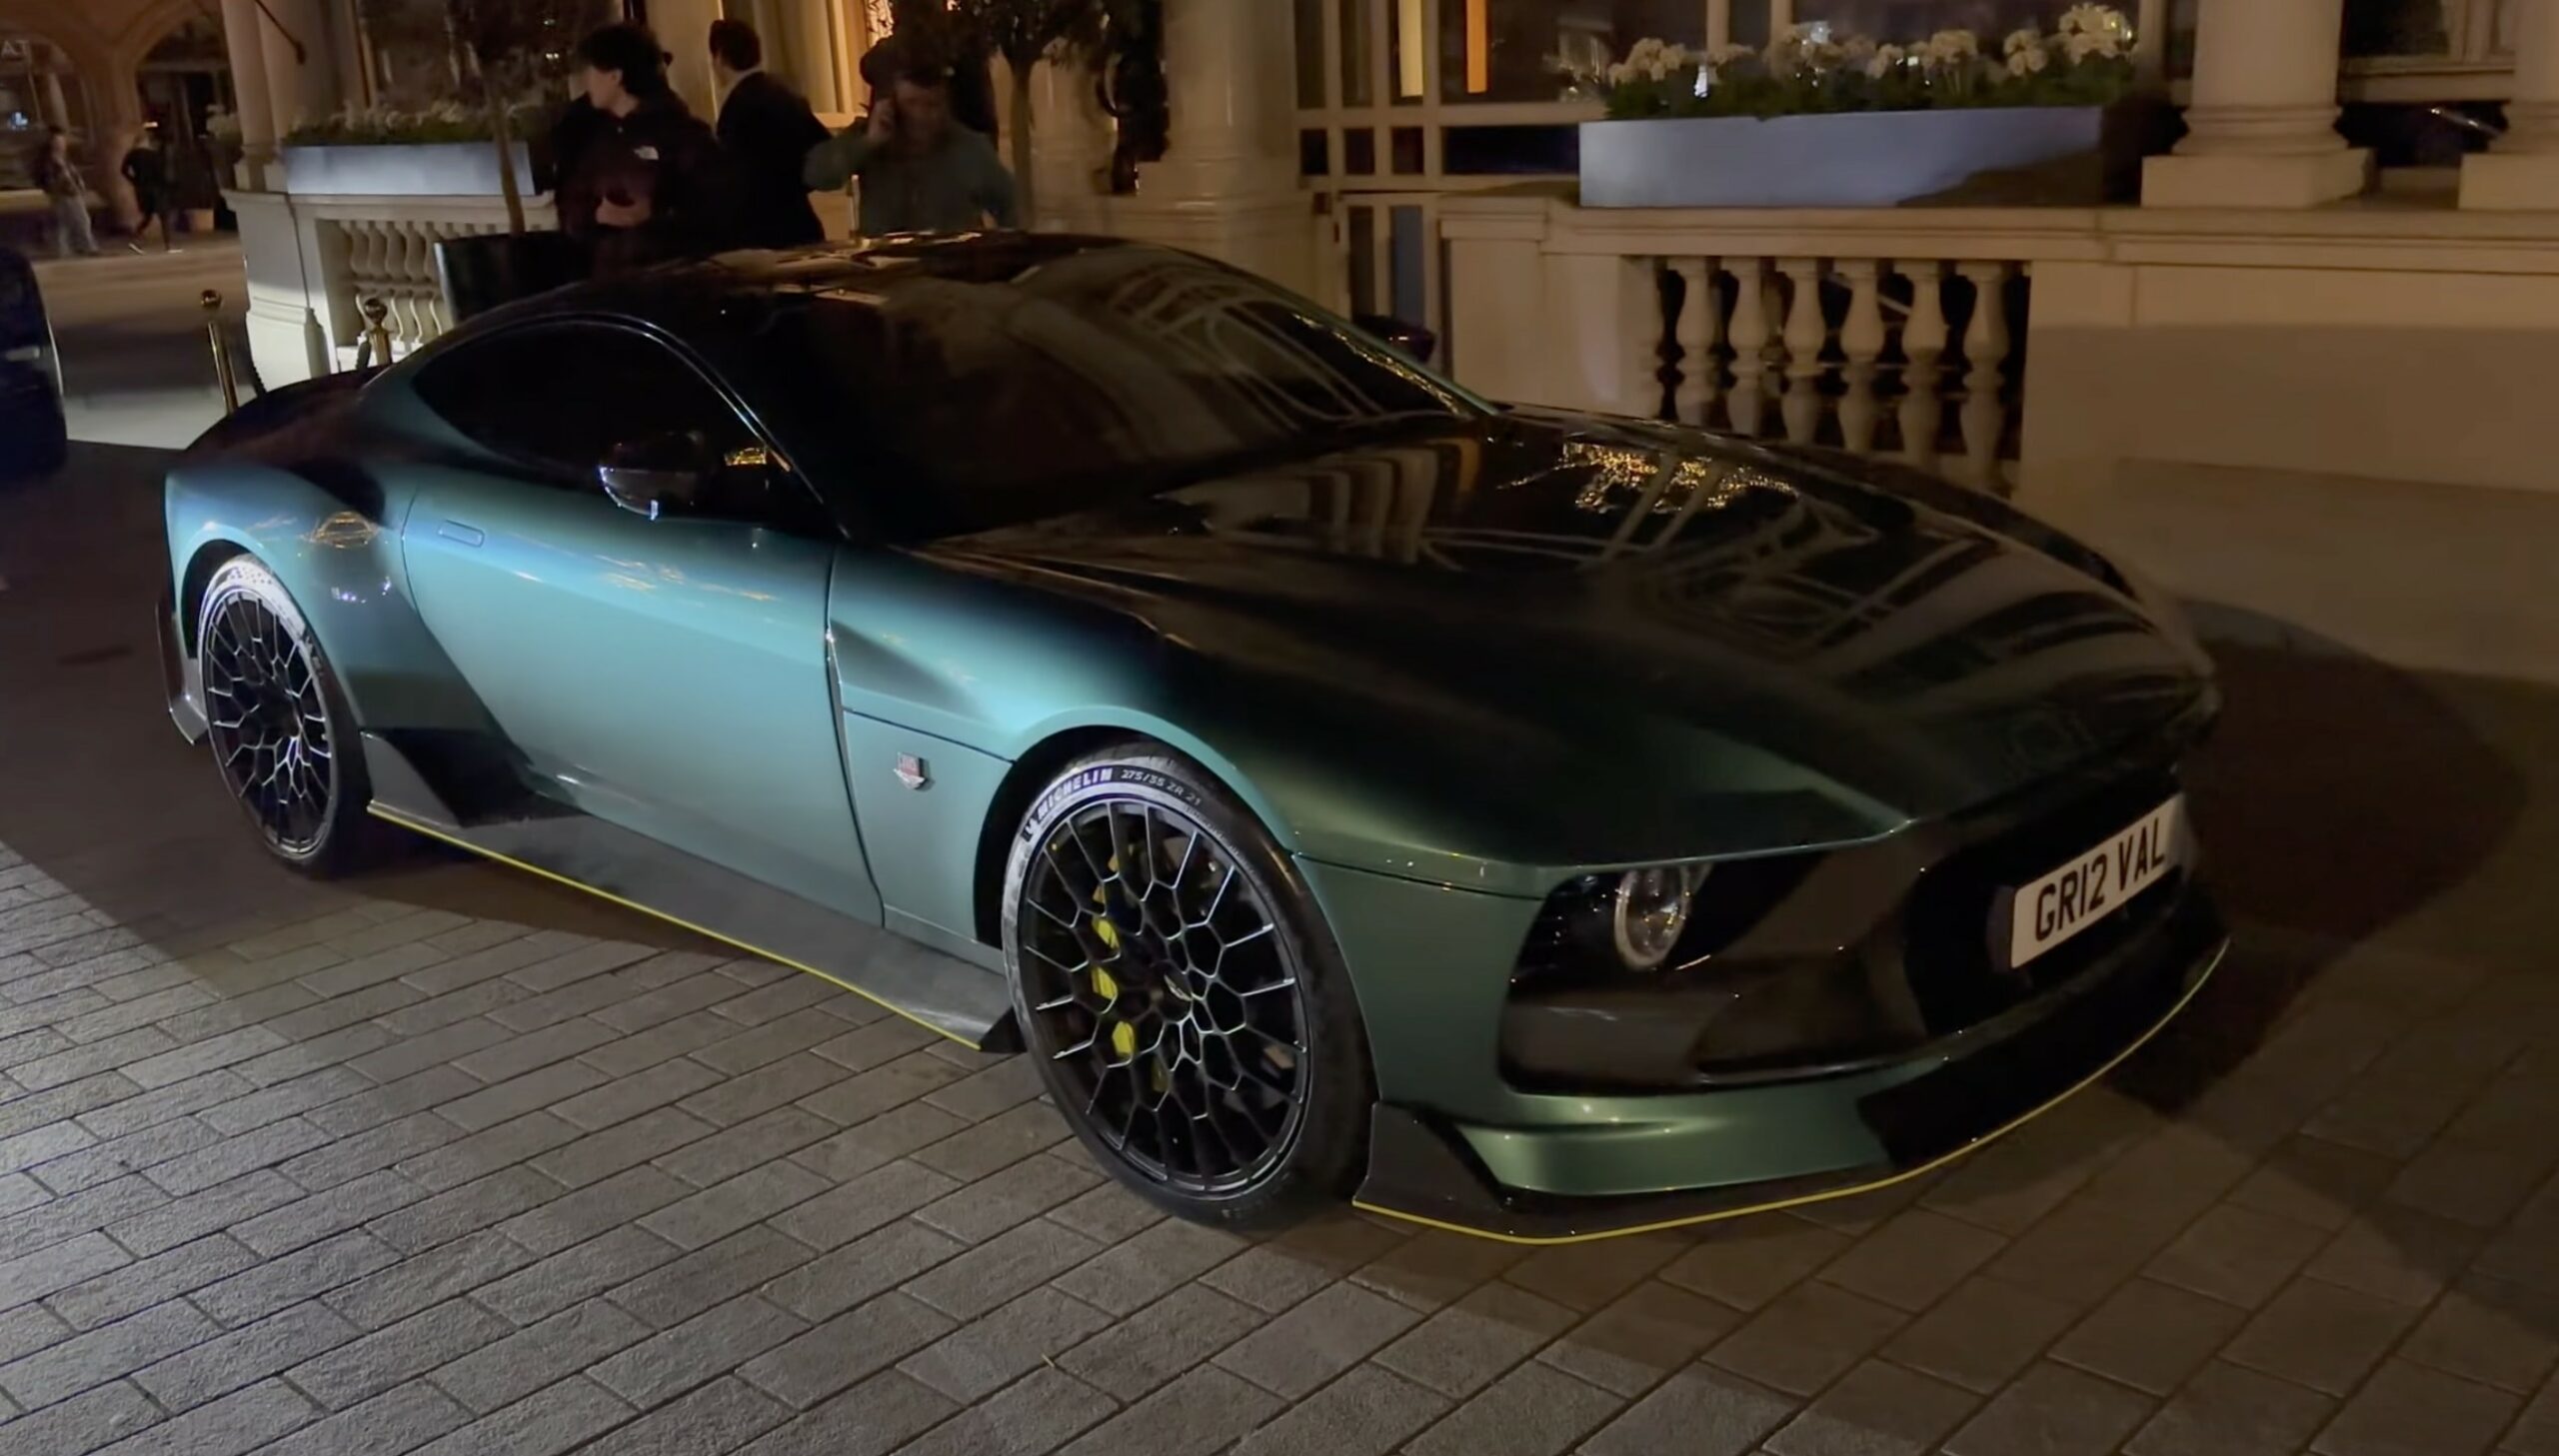 Gordon Ramsay Spotted in an Exotic Aston Martin Valour